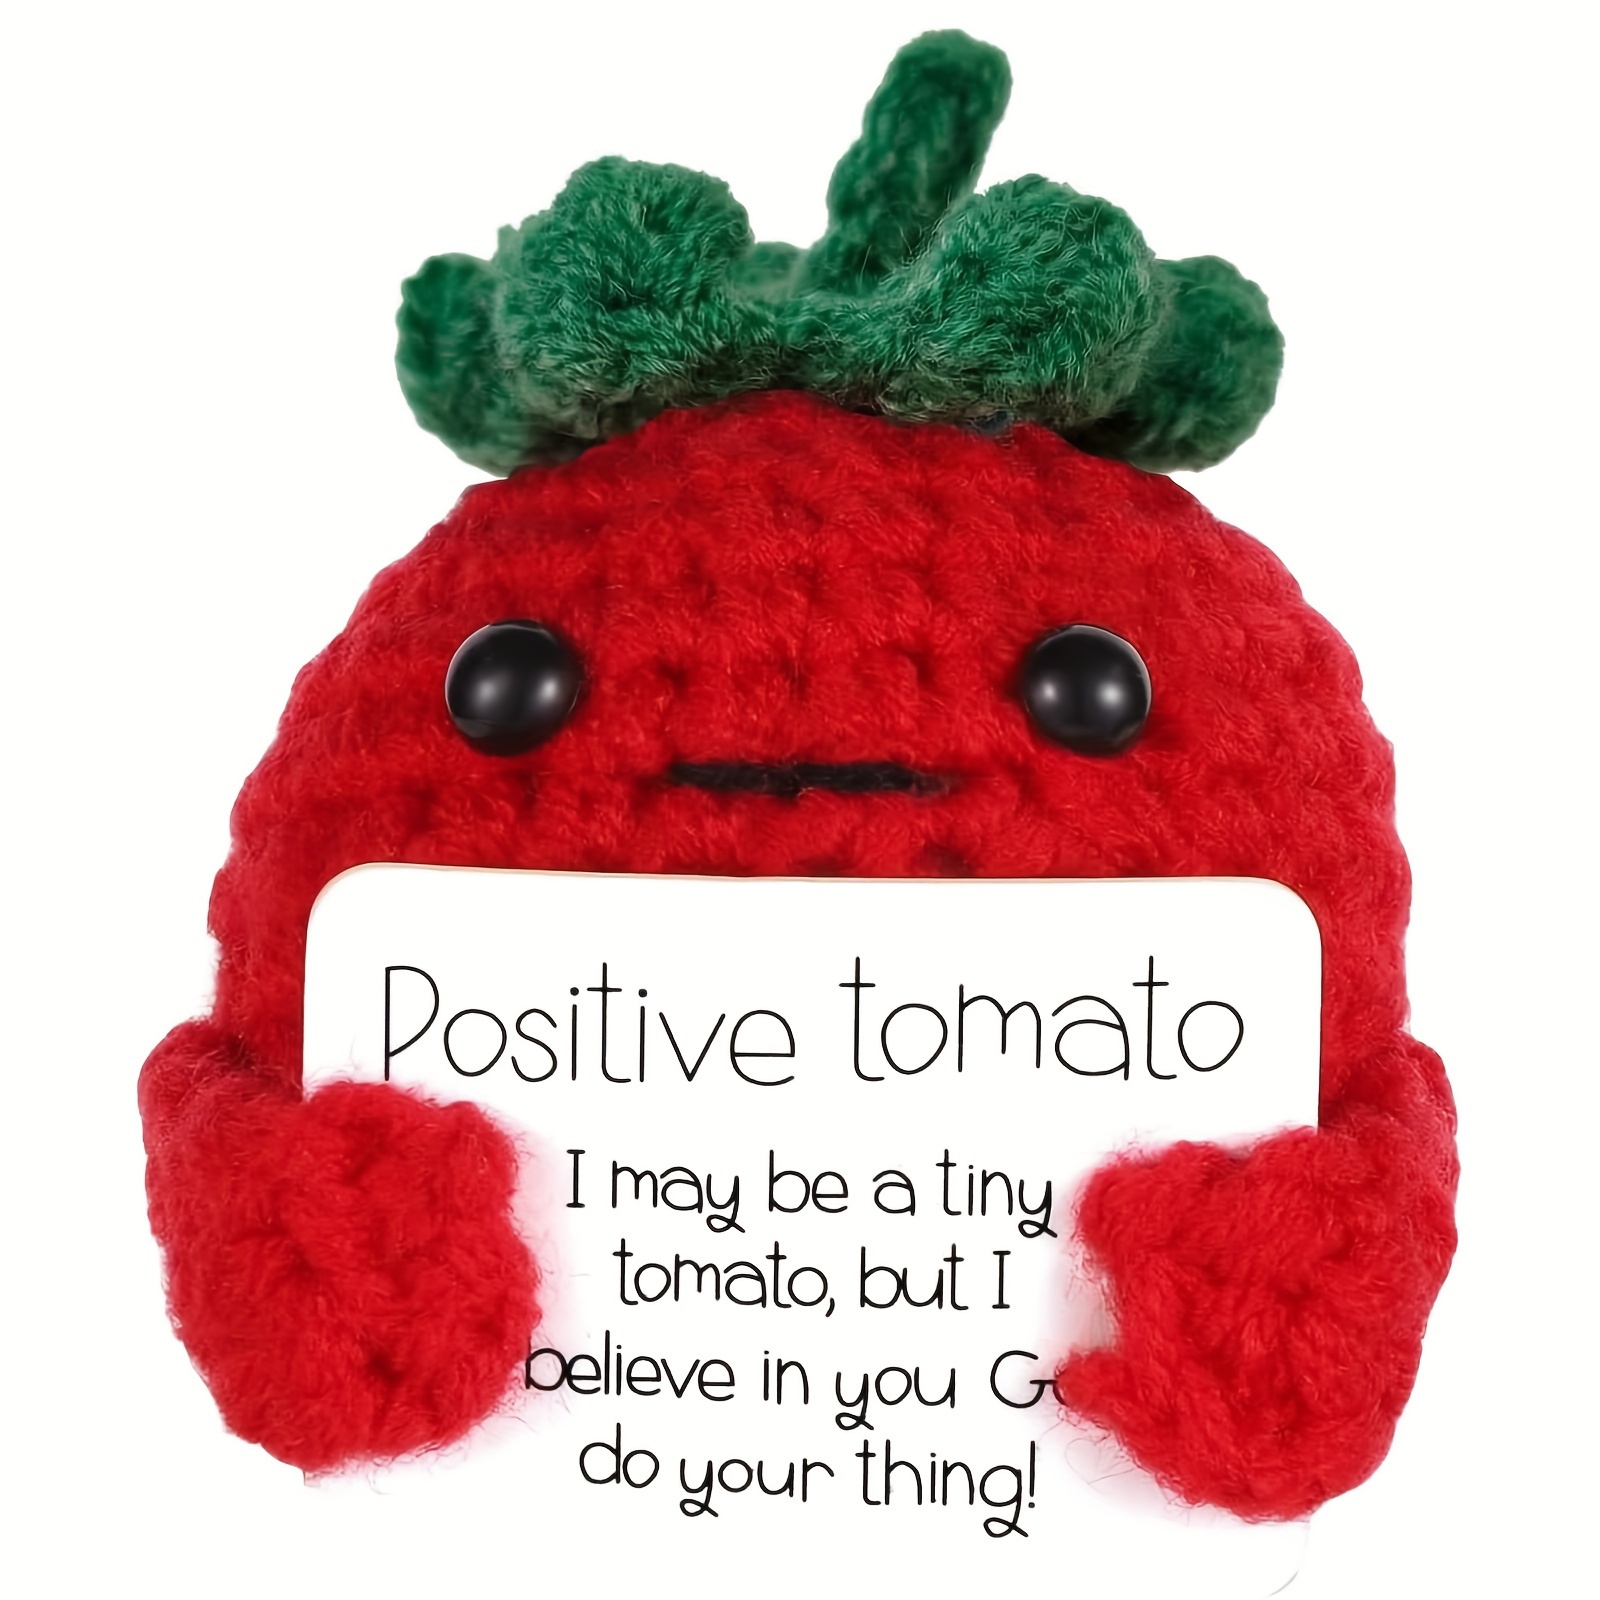 KINBOM Positive Potato, 2.75 Inch Funny Inspirational Positive Potato Funny  Knitted Positive Creative Cute Potato with Positive Cards Potato Doll for